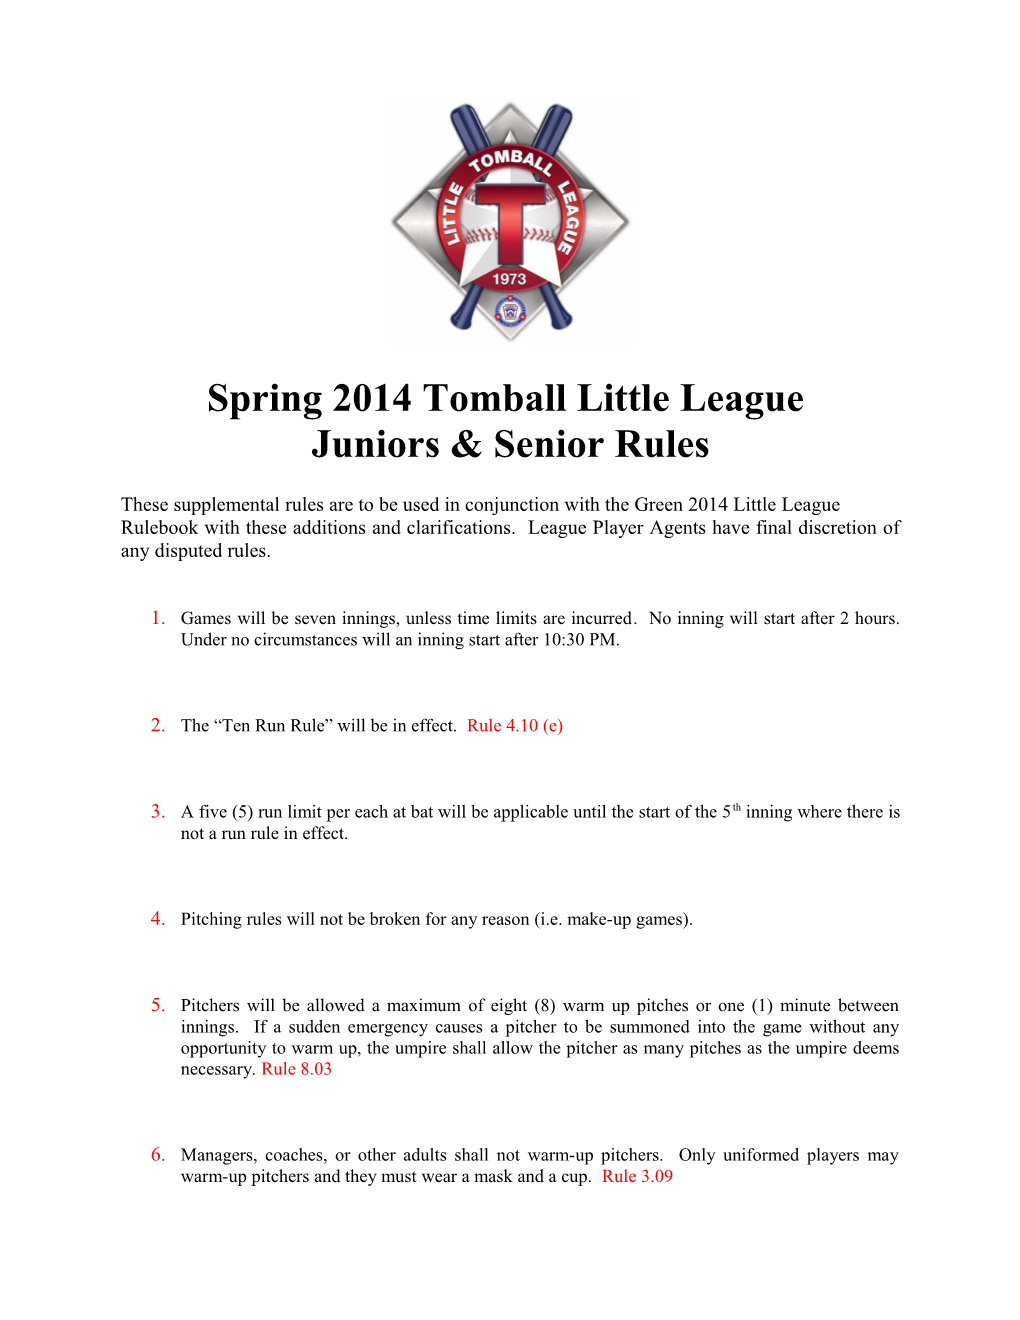 Spring 2014 Tomball Little League Juniors & Senior Rules